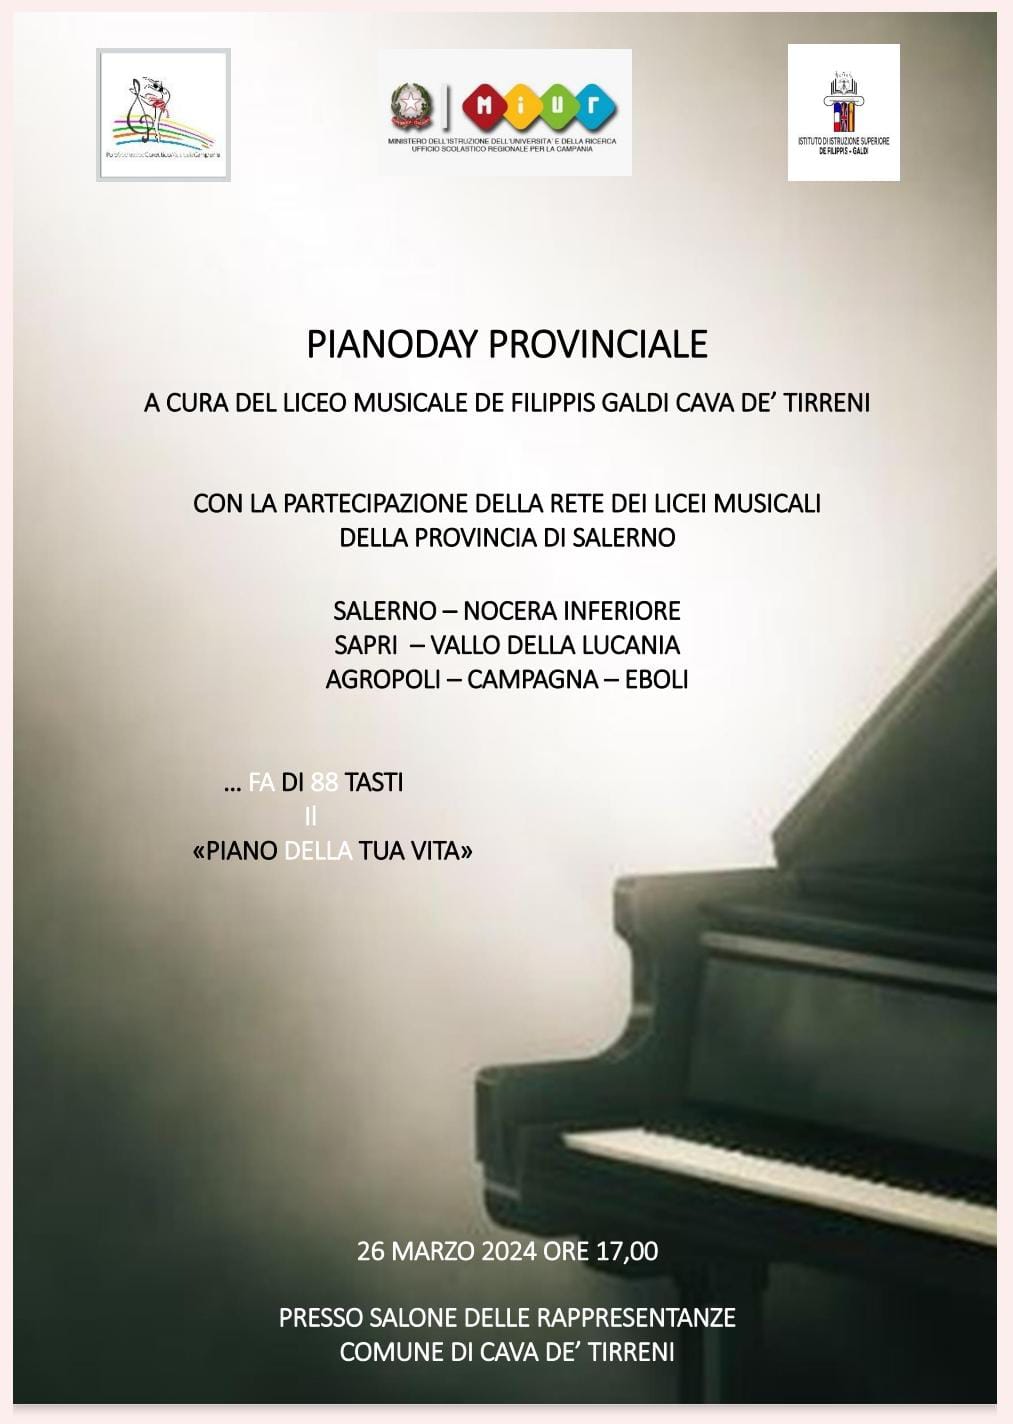 Pianoday provinciale